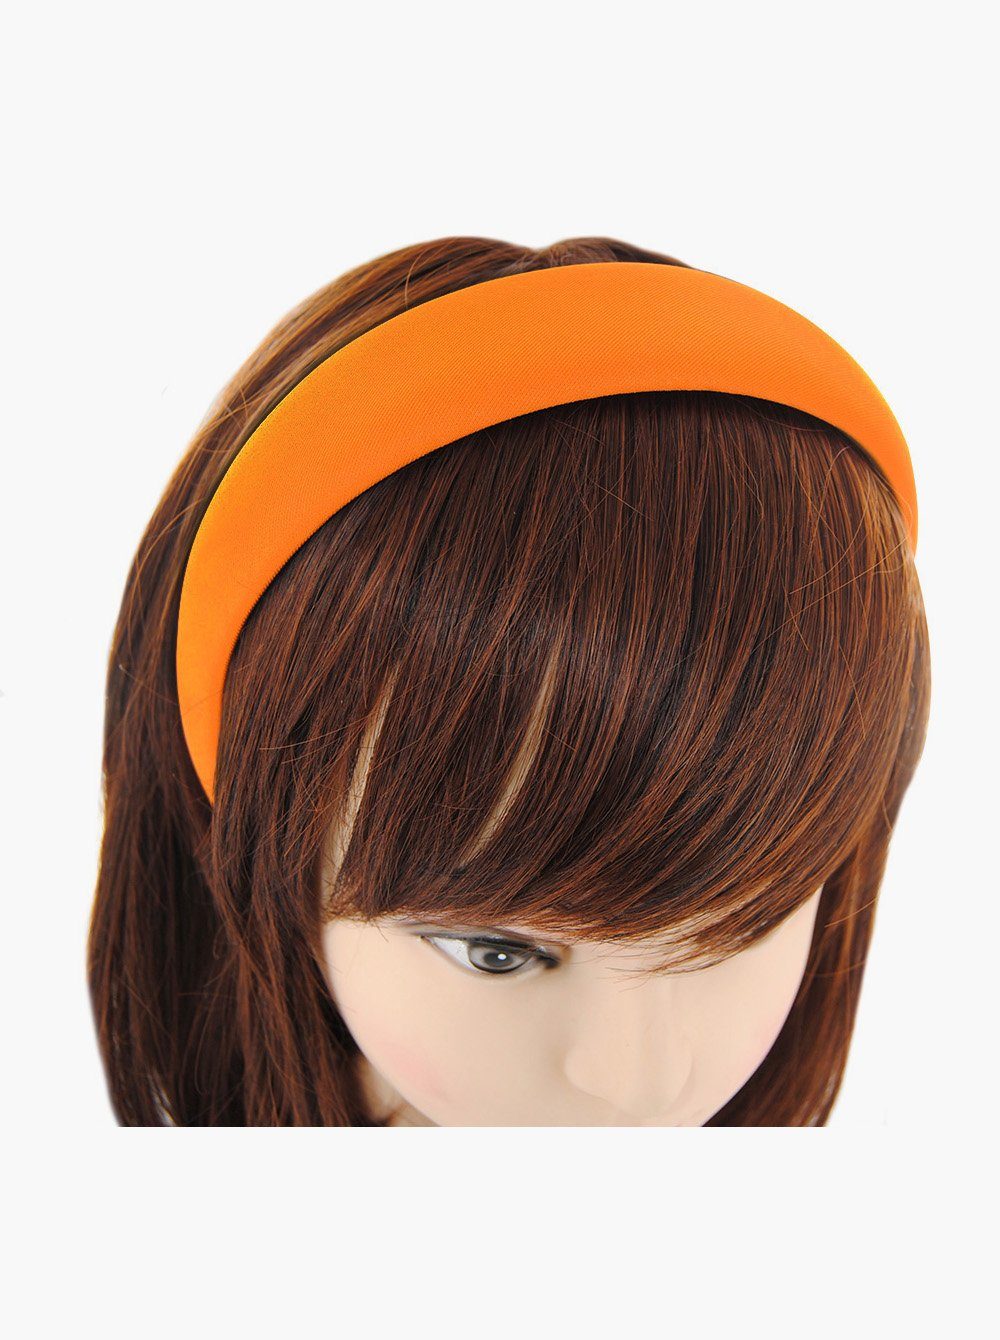 axy Haarreif Breiter Haarreif Damen mit Candy Haareifen Orange Colours, Stoff Vintage gepolstertes Haarband